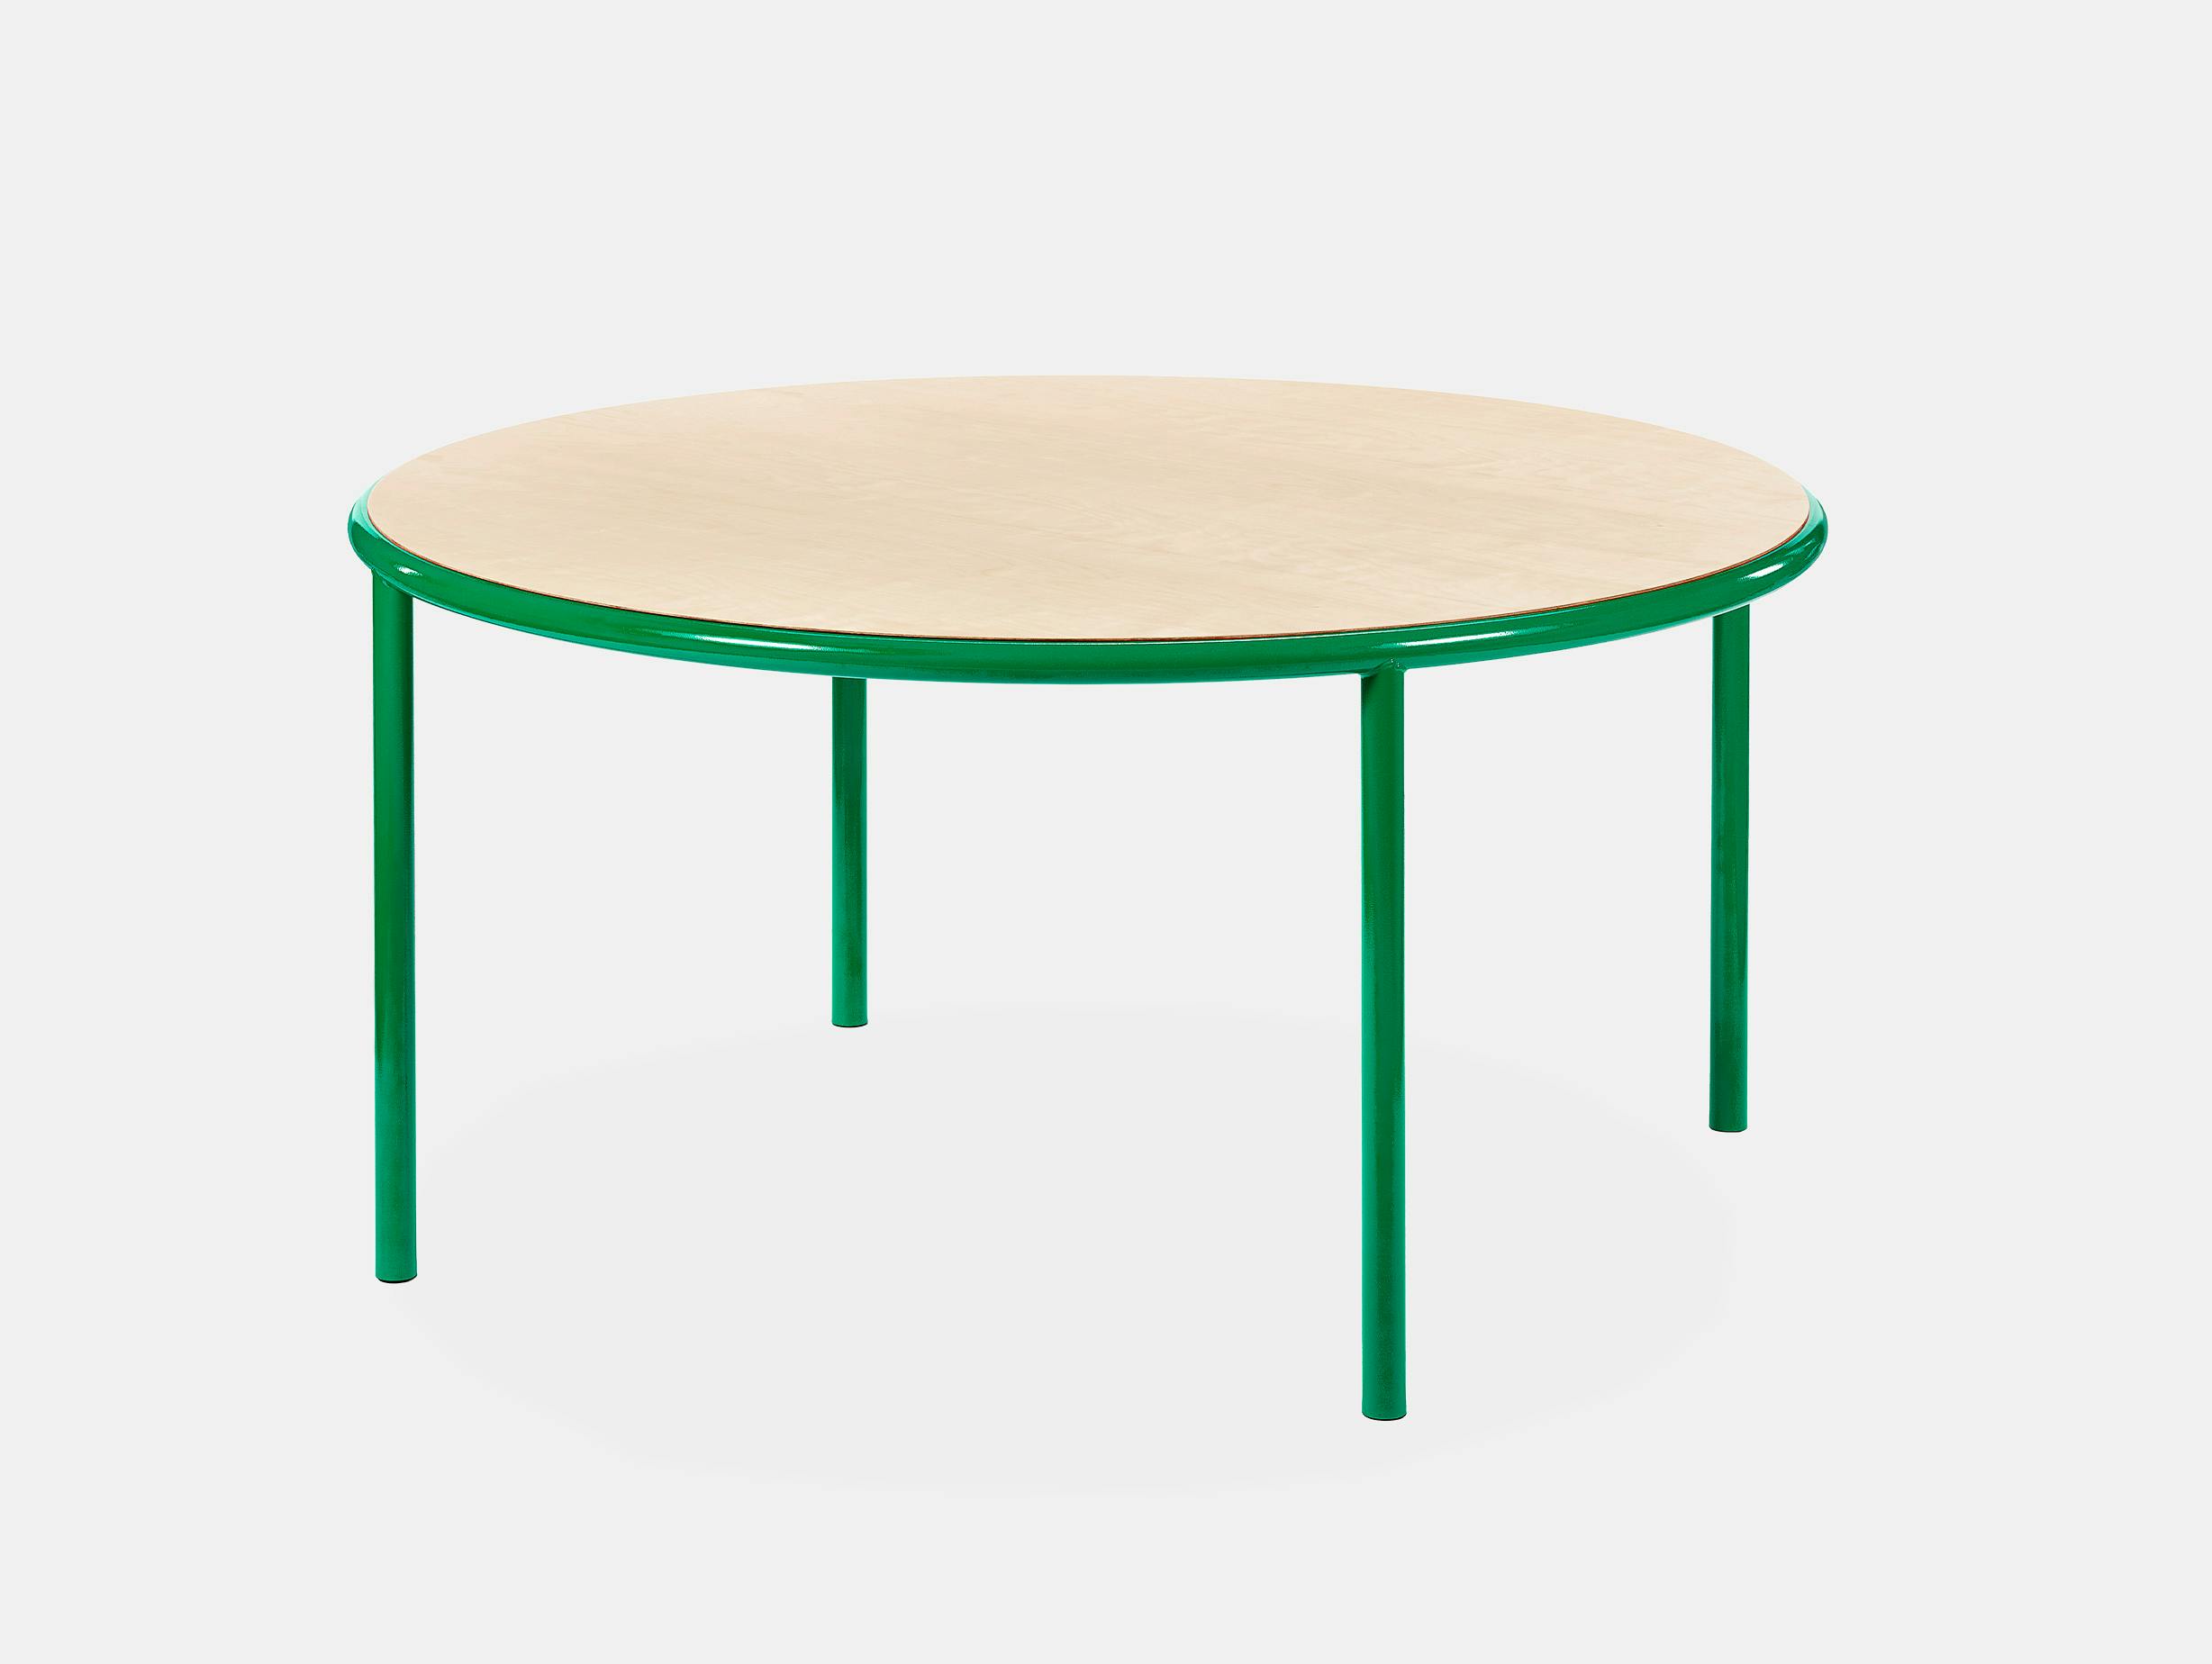 Muller van severen wooden table large round green birch